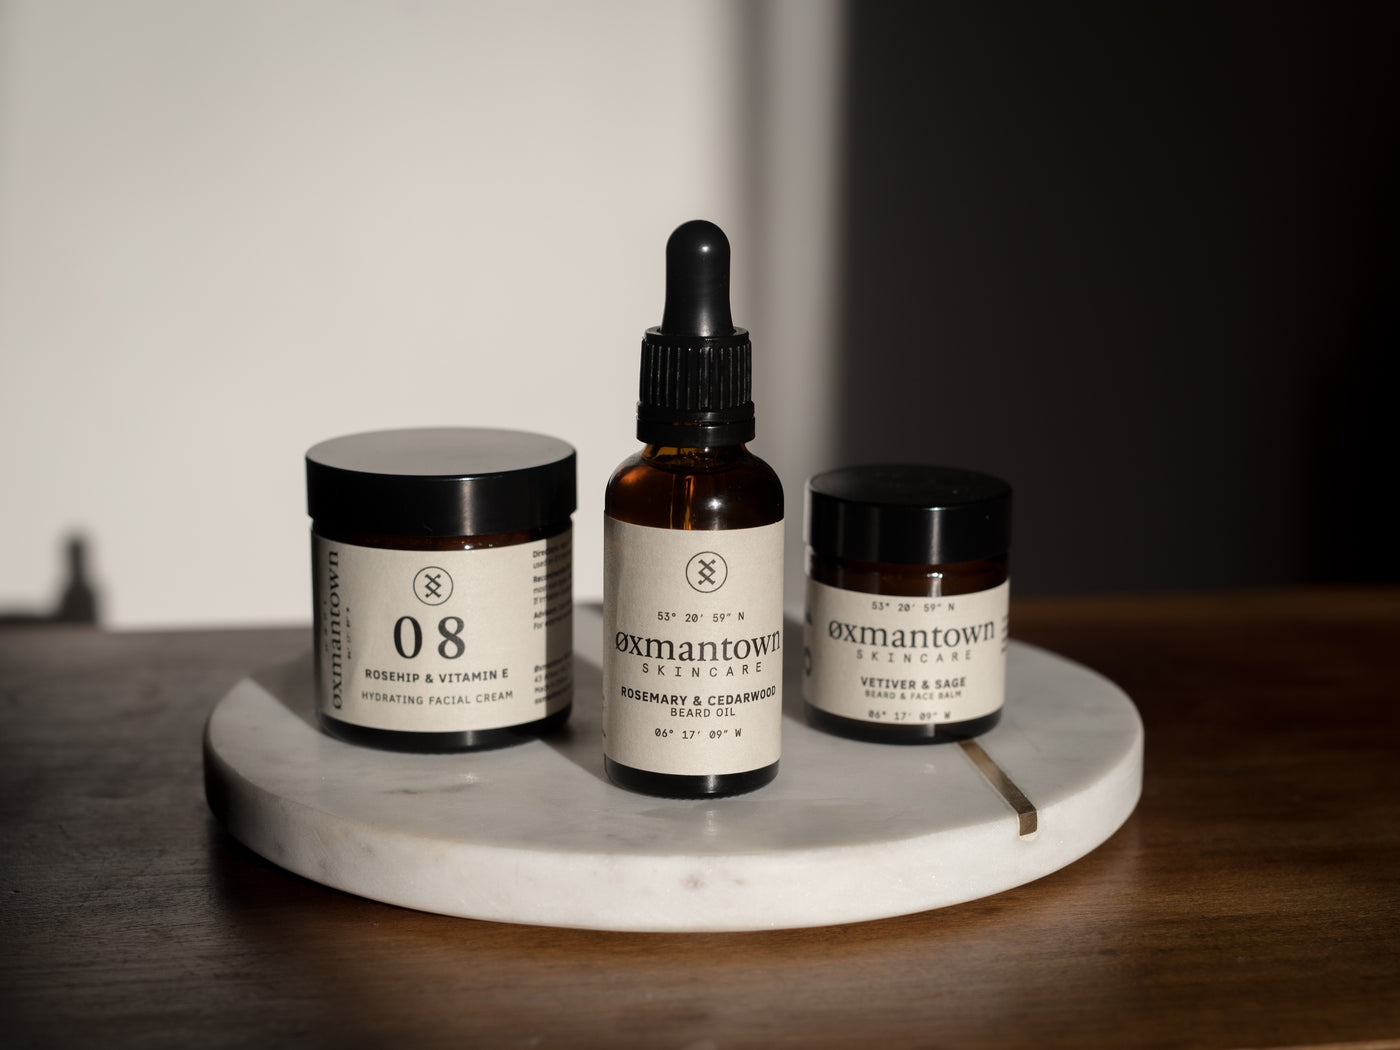 Rosemary & Cedarwood Beard Oil